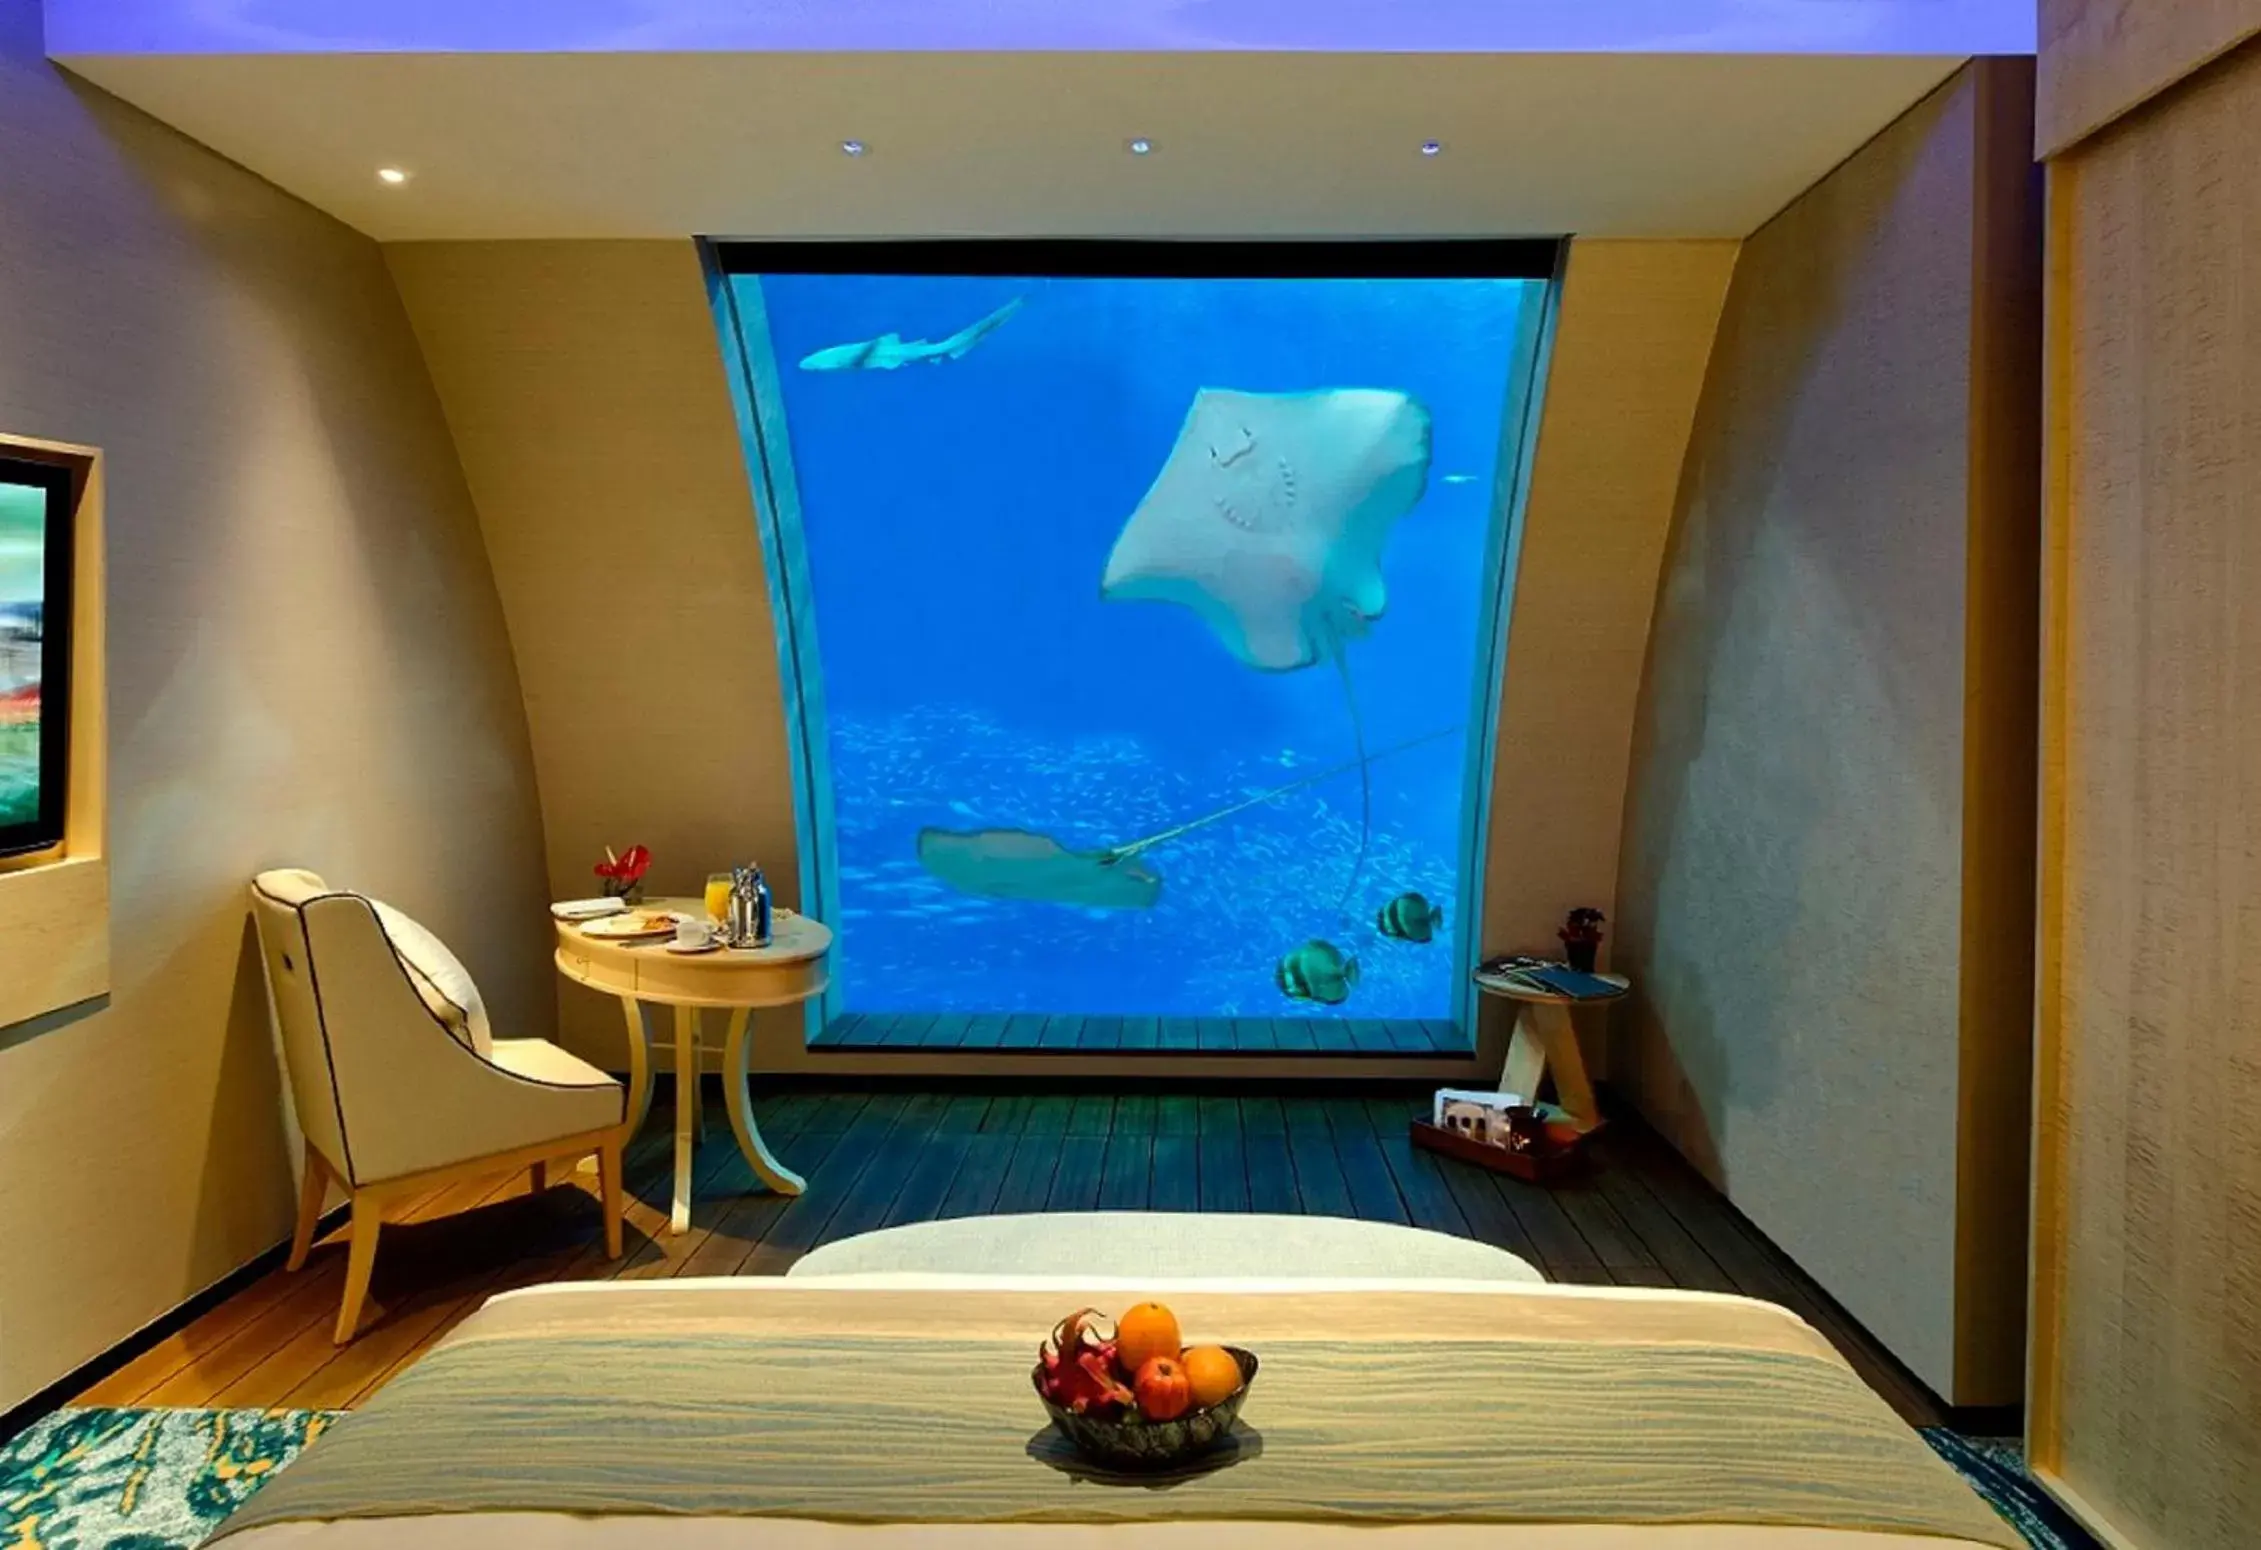 Bedroom in Resorts World Sentosa - Equarius Villas